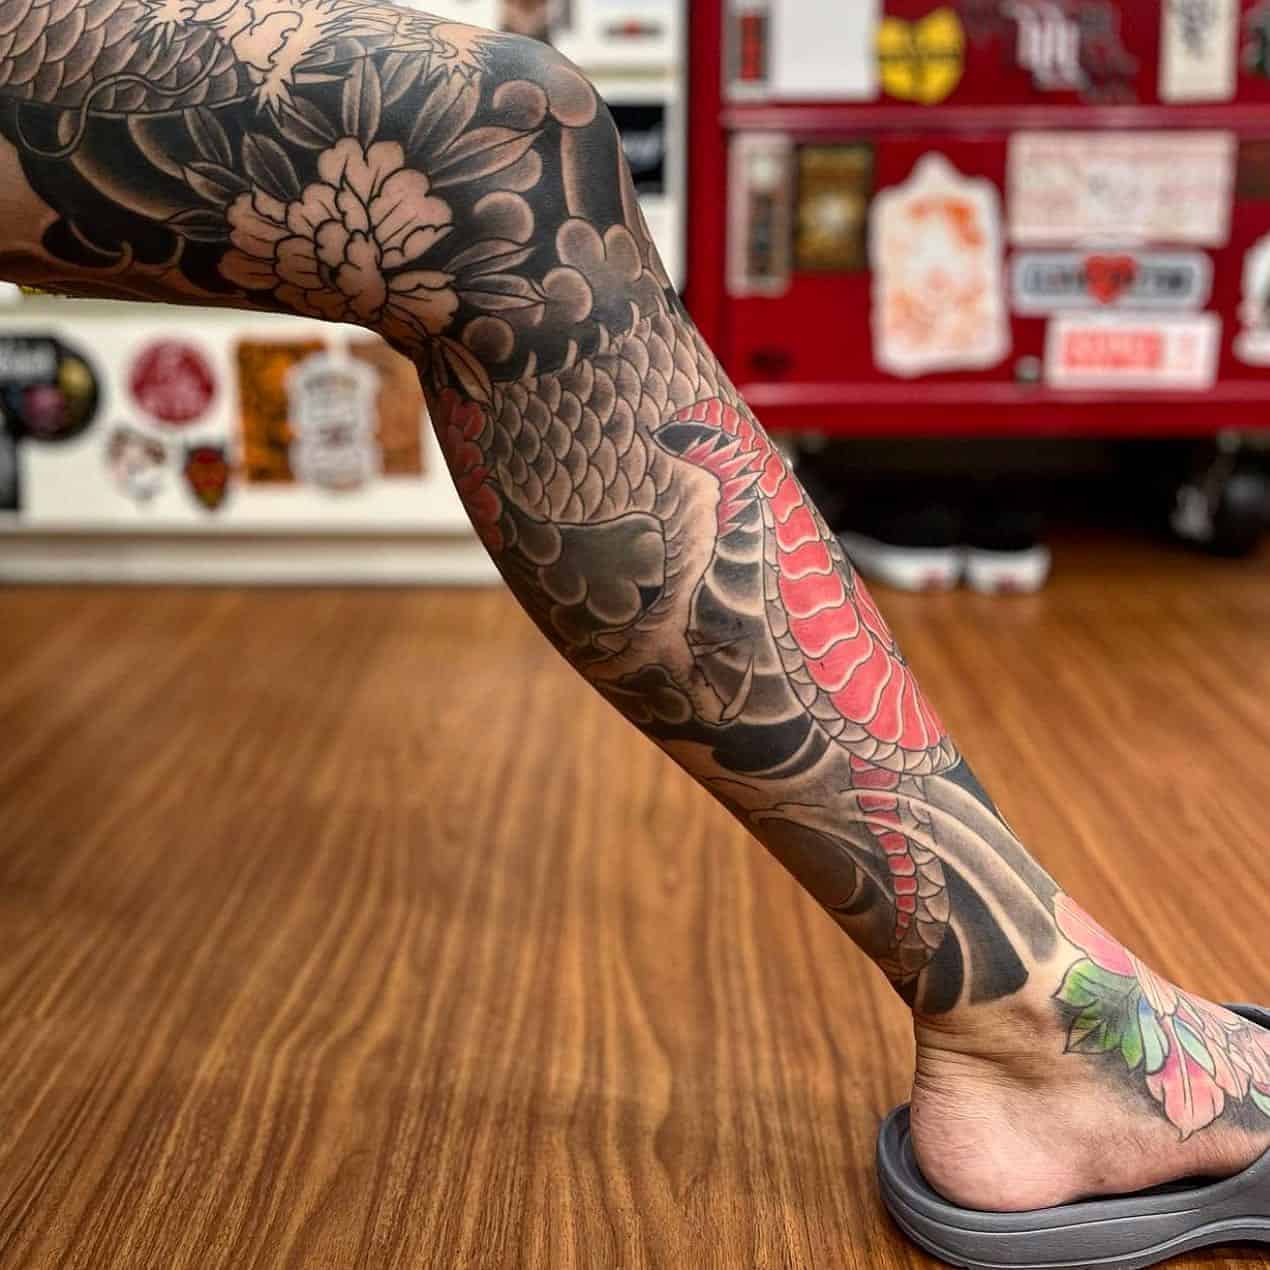 Leg sleeve tattoo 2